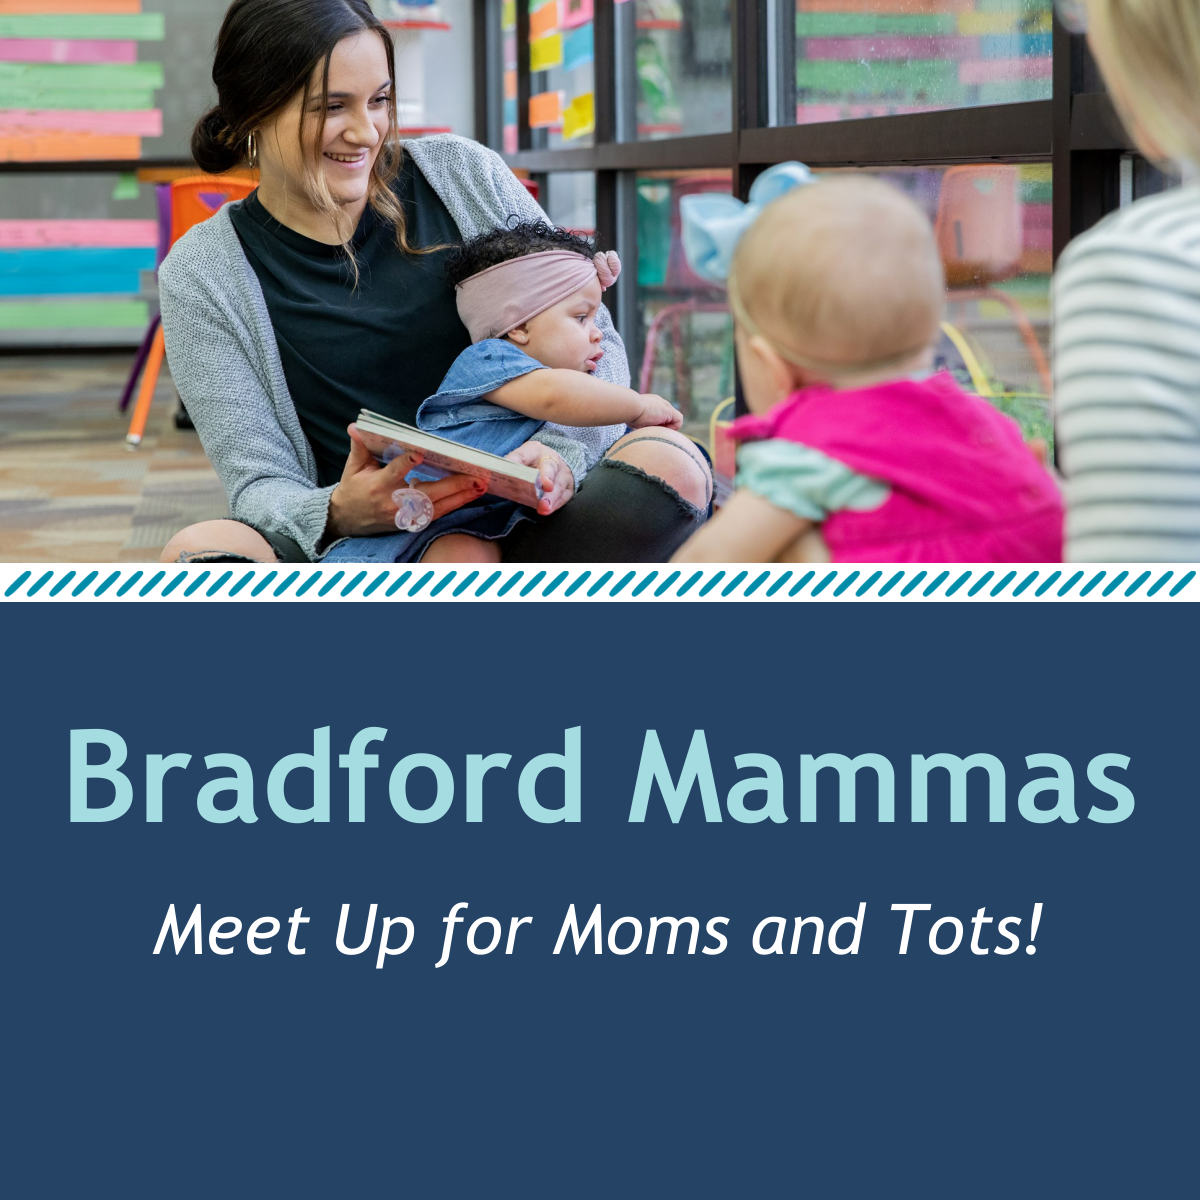 Bradford Mammas - Drop in to meet with new moms